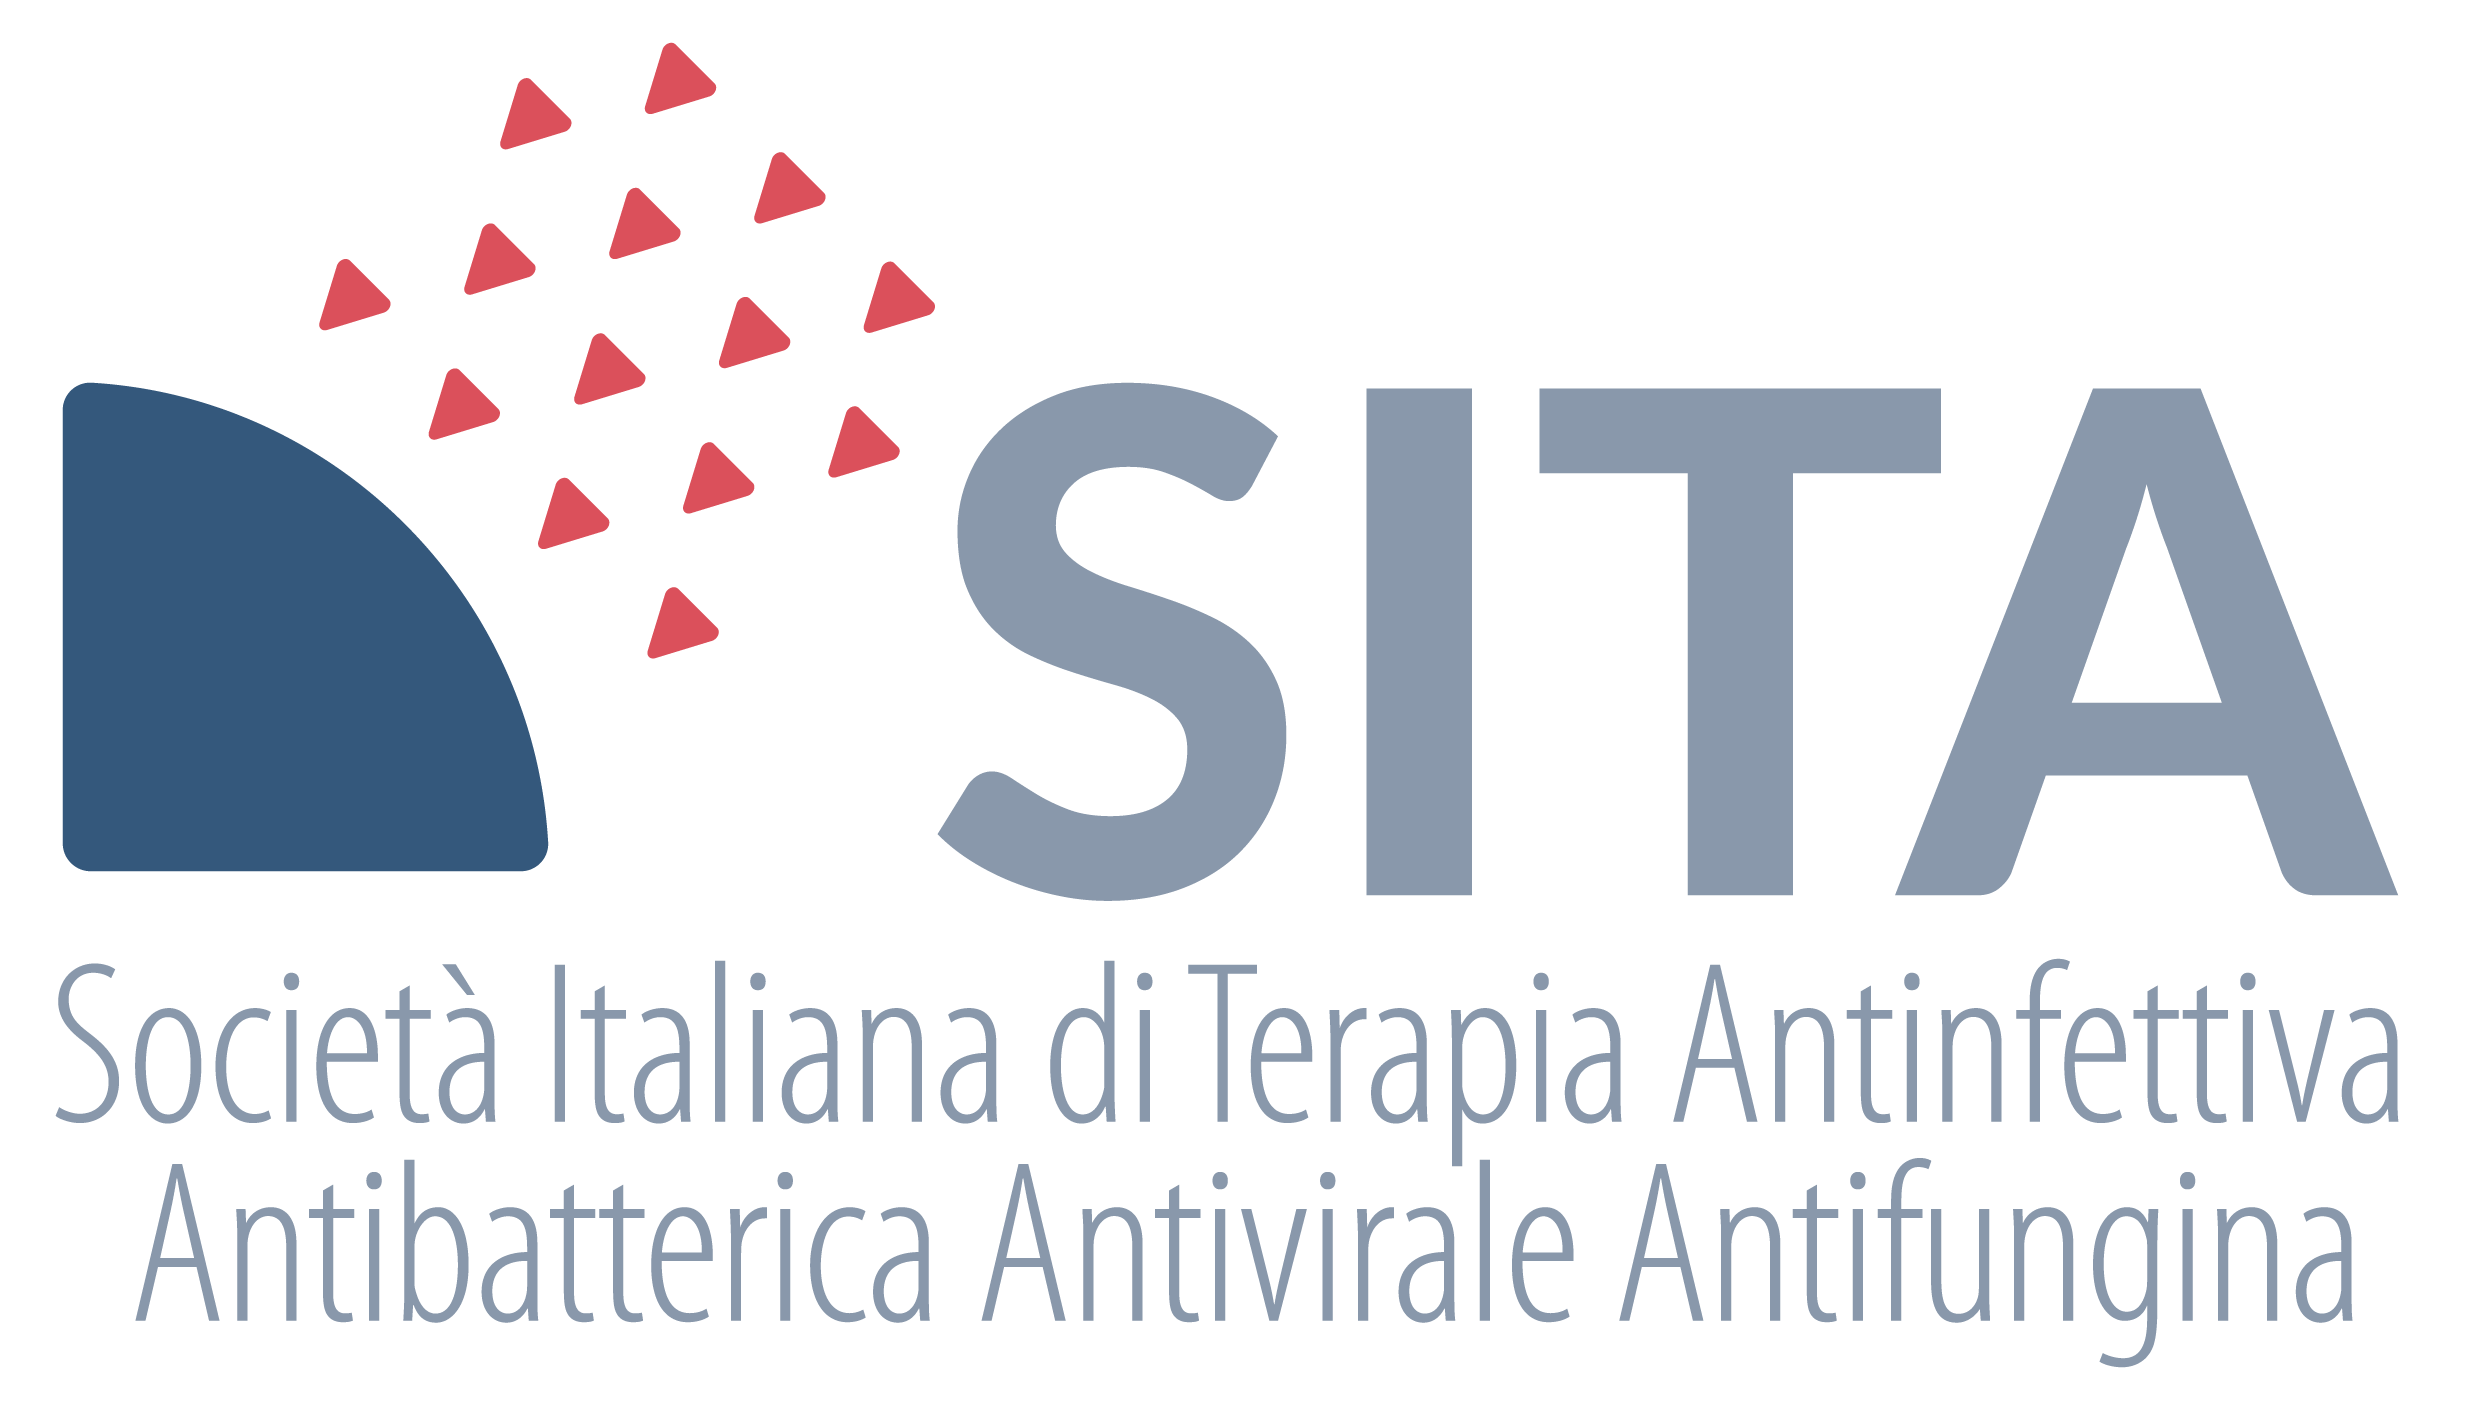 Società Italiana di Terapia Antinfettiva Antibatterica Antivirale Antifungina - SITA